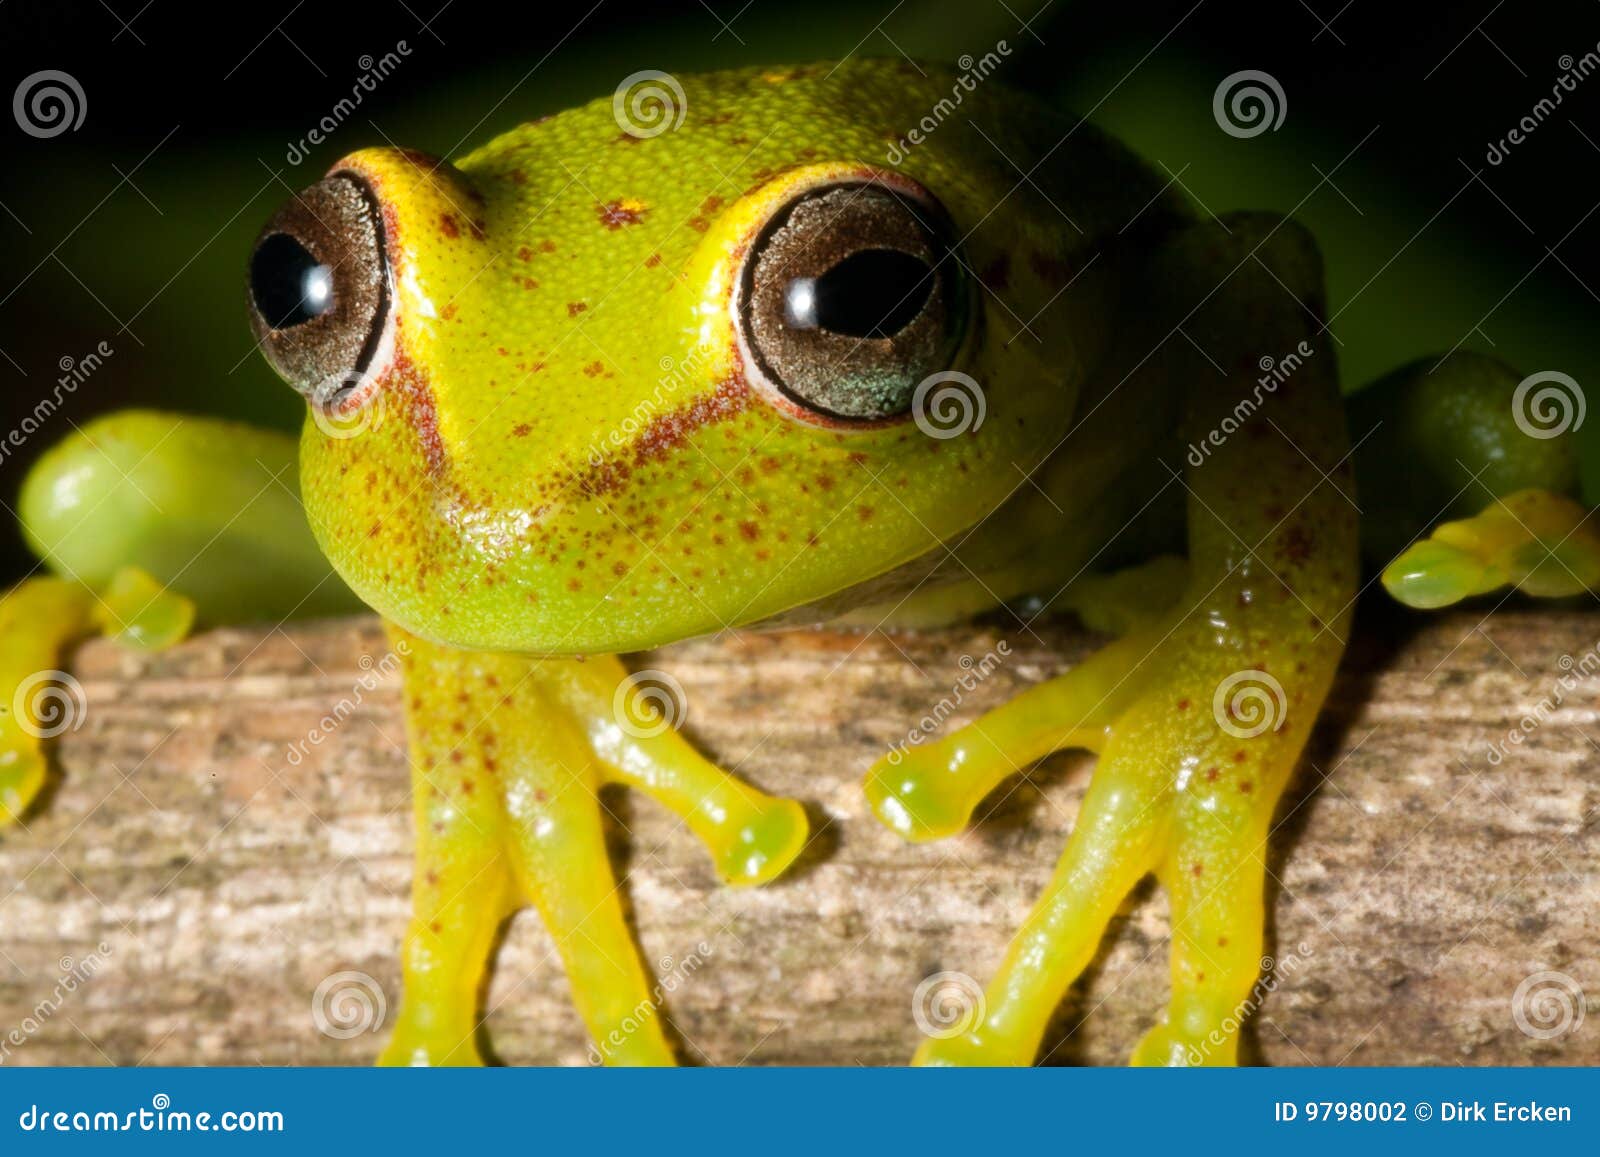 tree frog rain forest yellow amphibian red eye